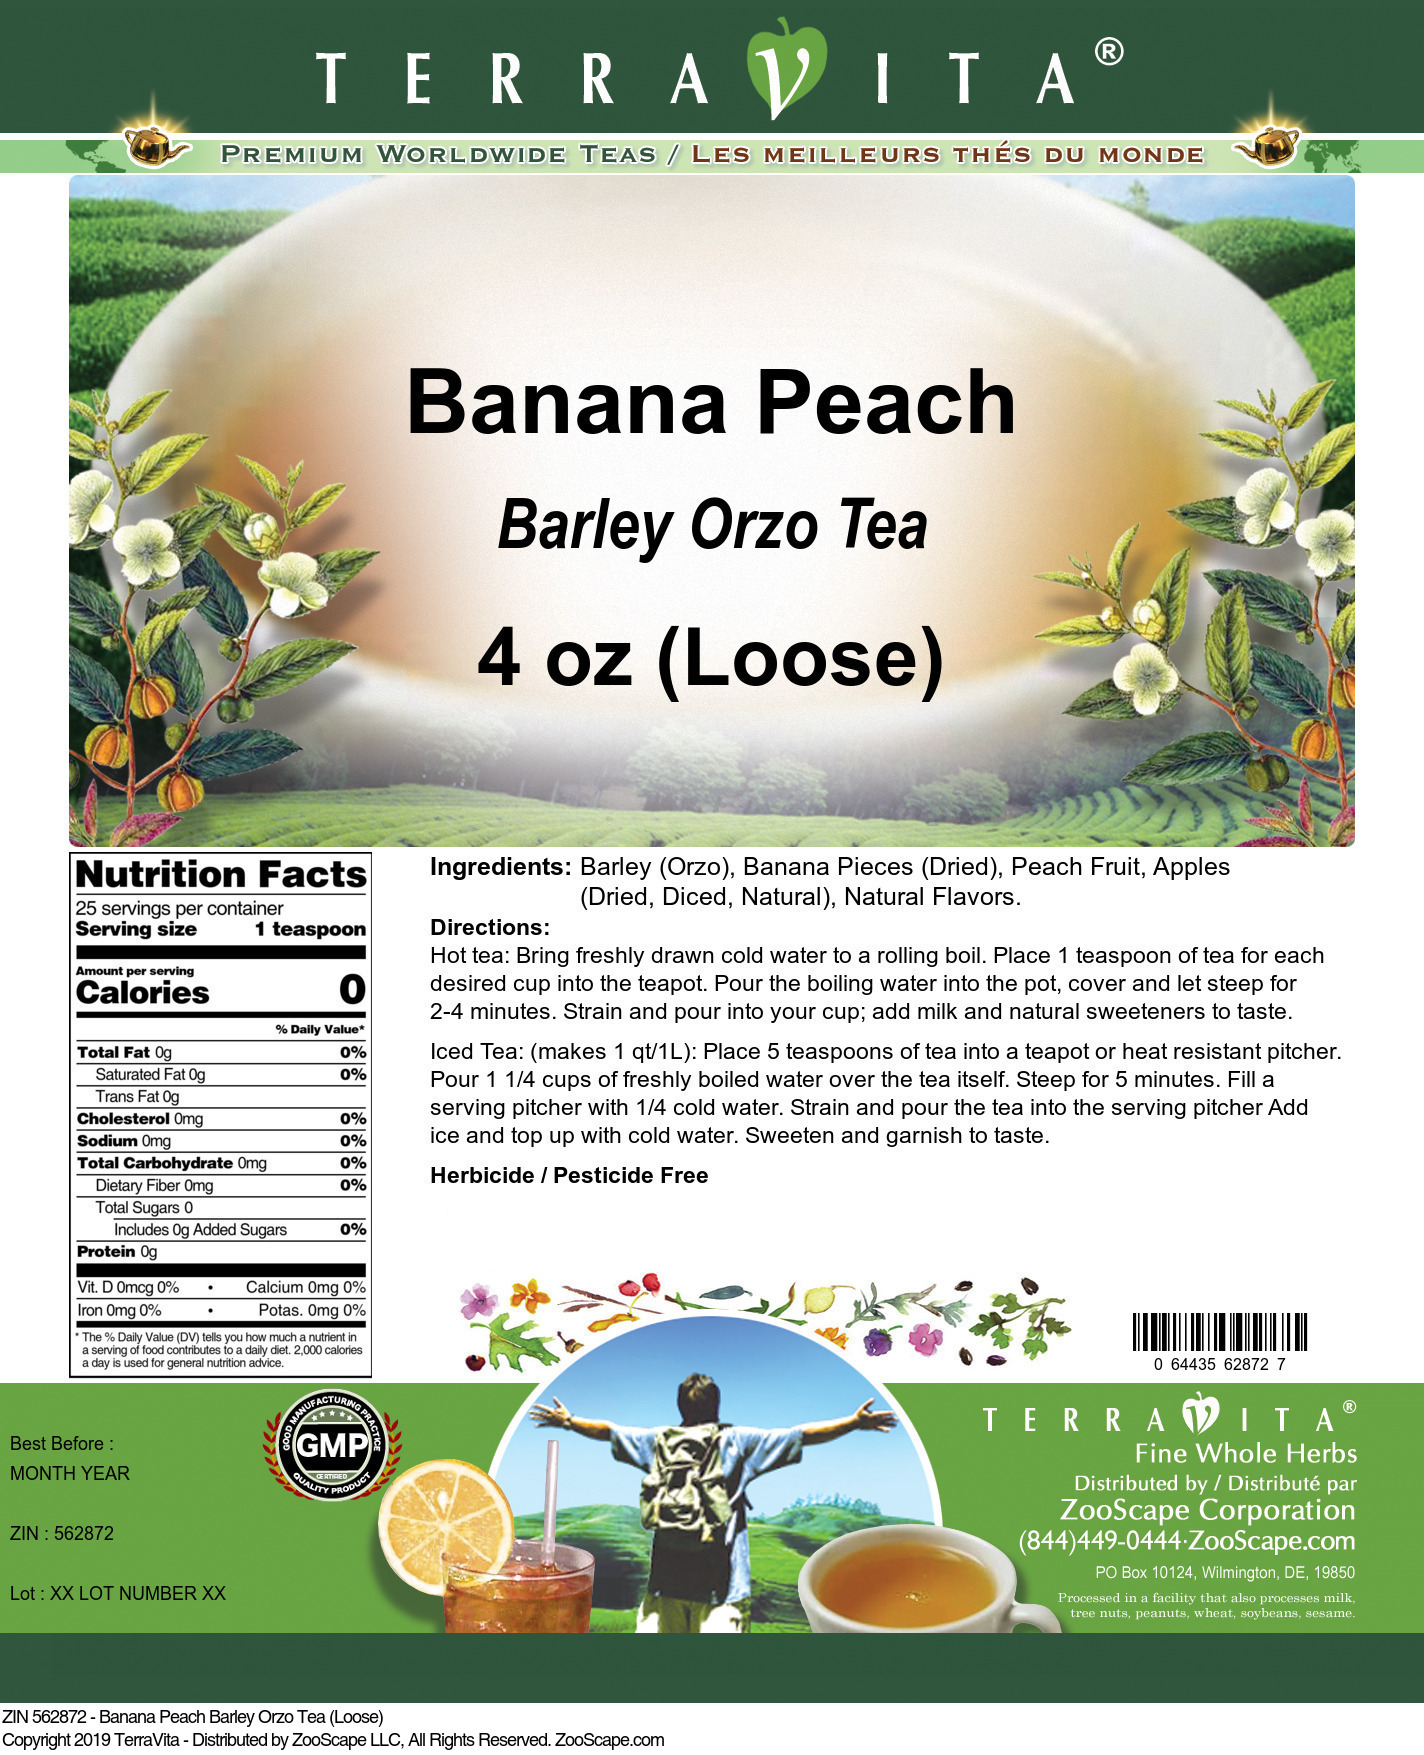 Banana Peach Barley Orzo Tea (Loose) - Label